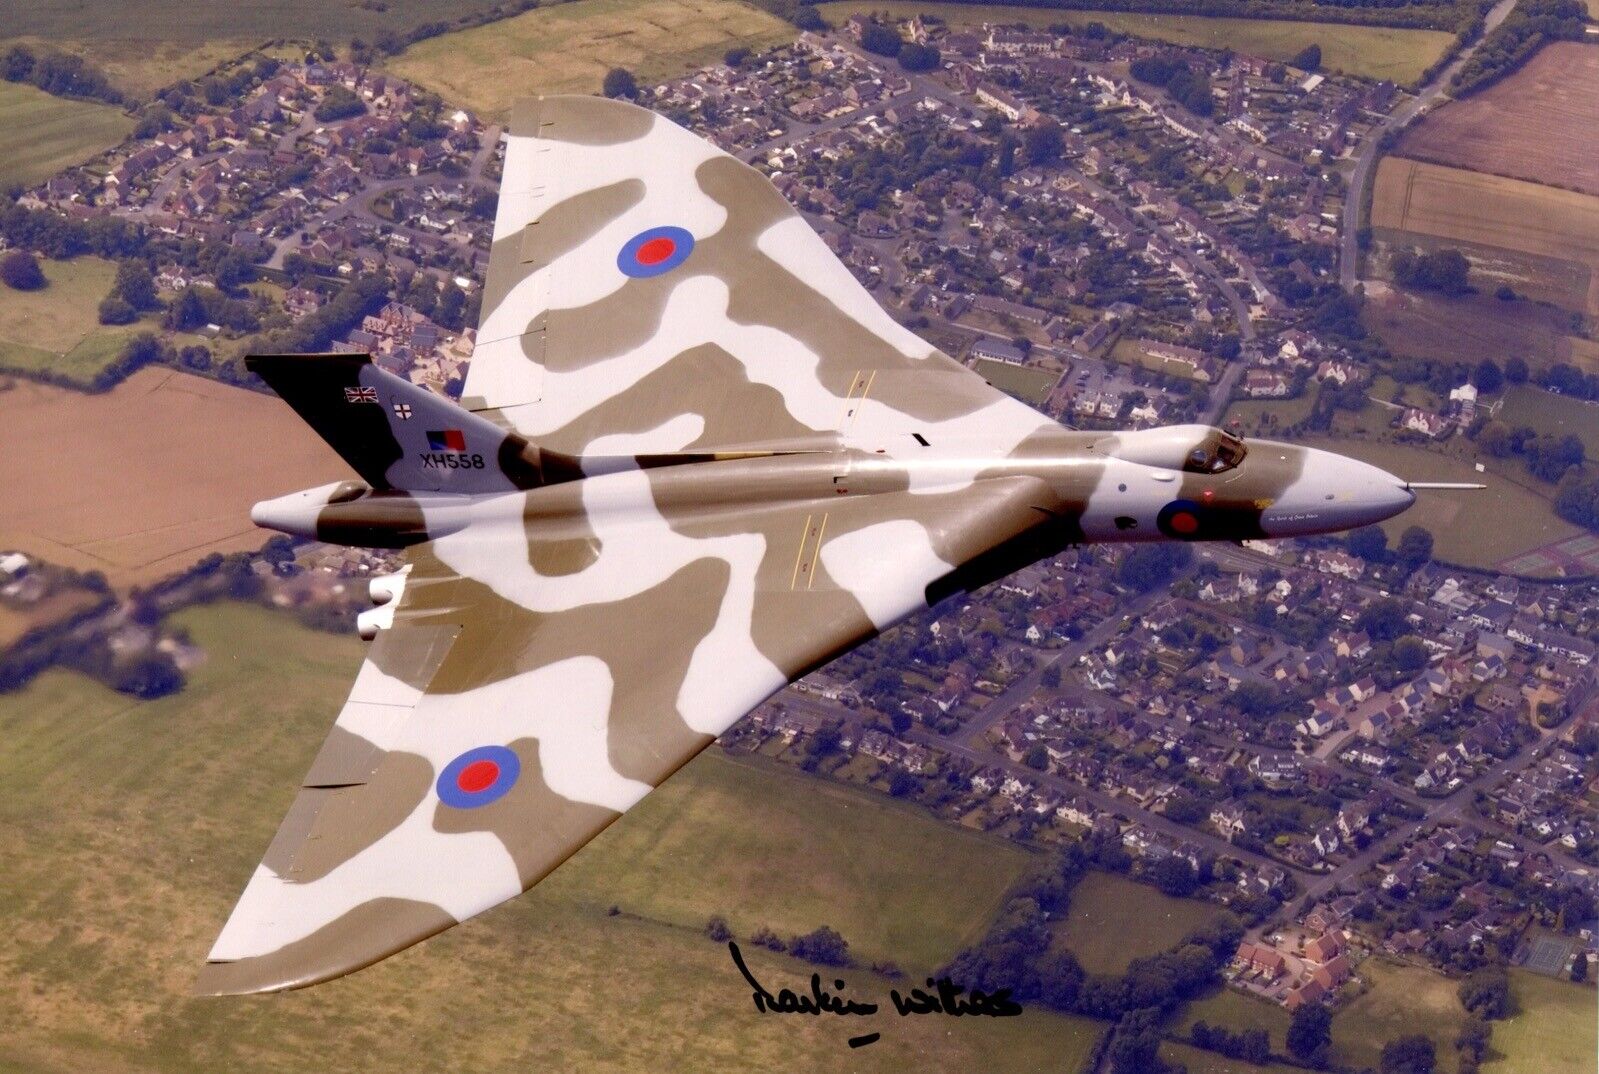 RAF Vulcan Bomber  Photo Poster painting signed by Falklands War pilot IMAGE No3 - UACC DEALER